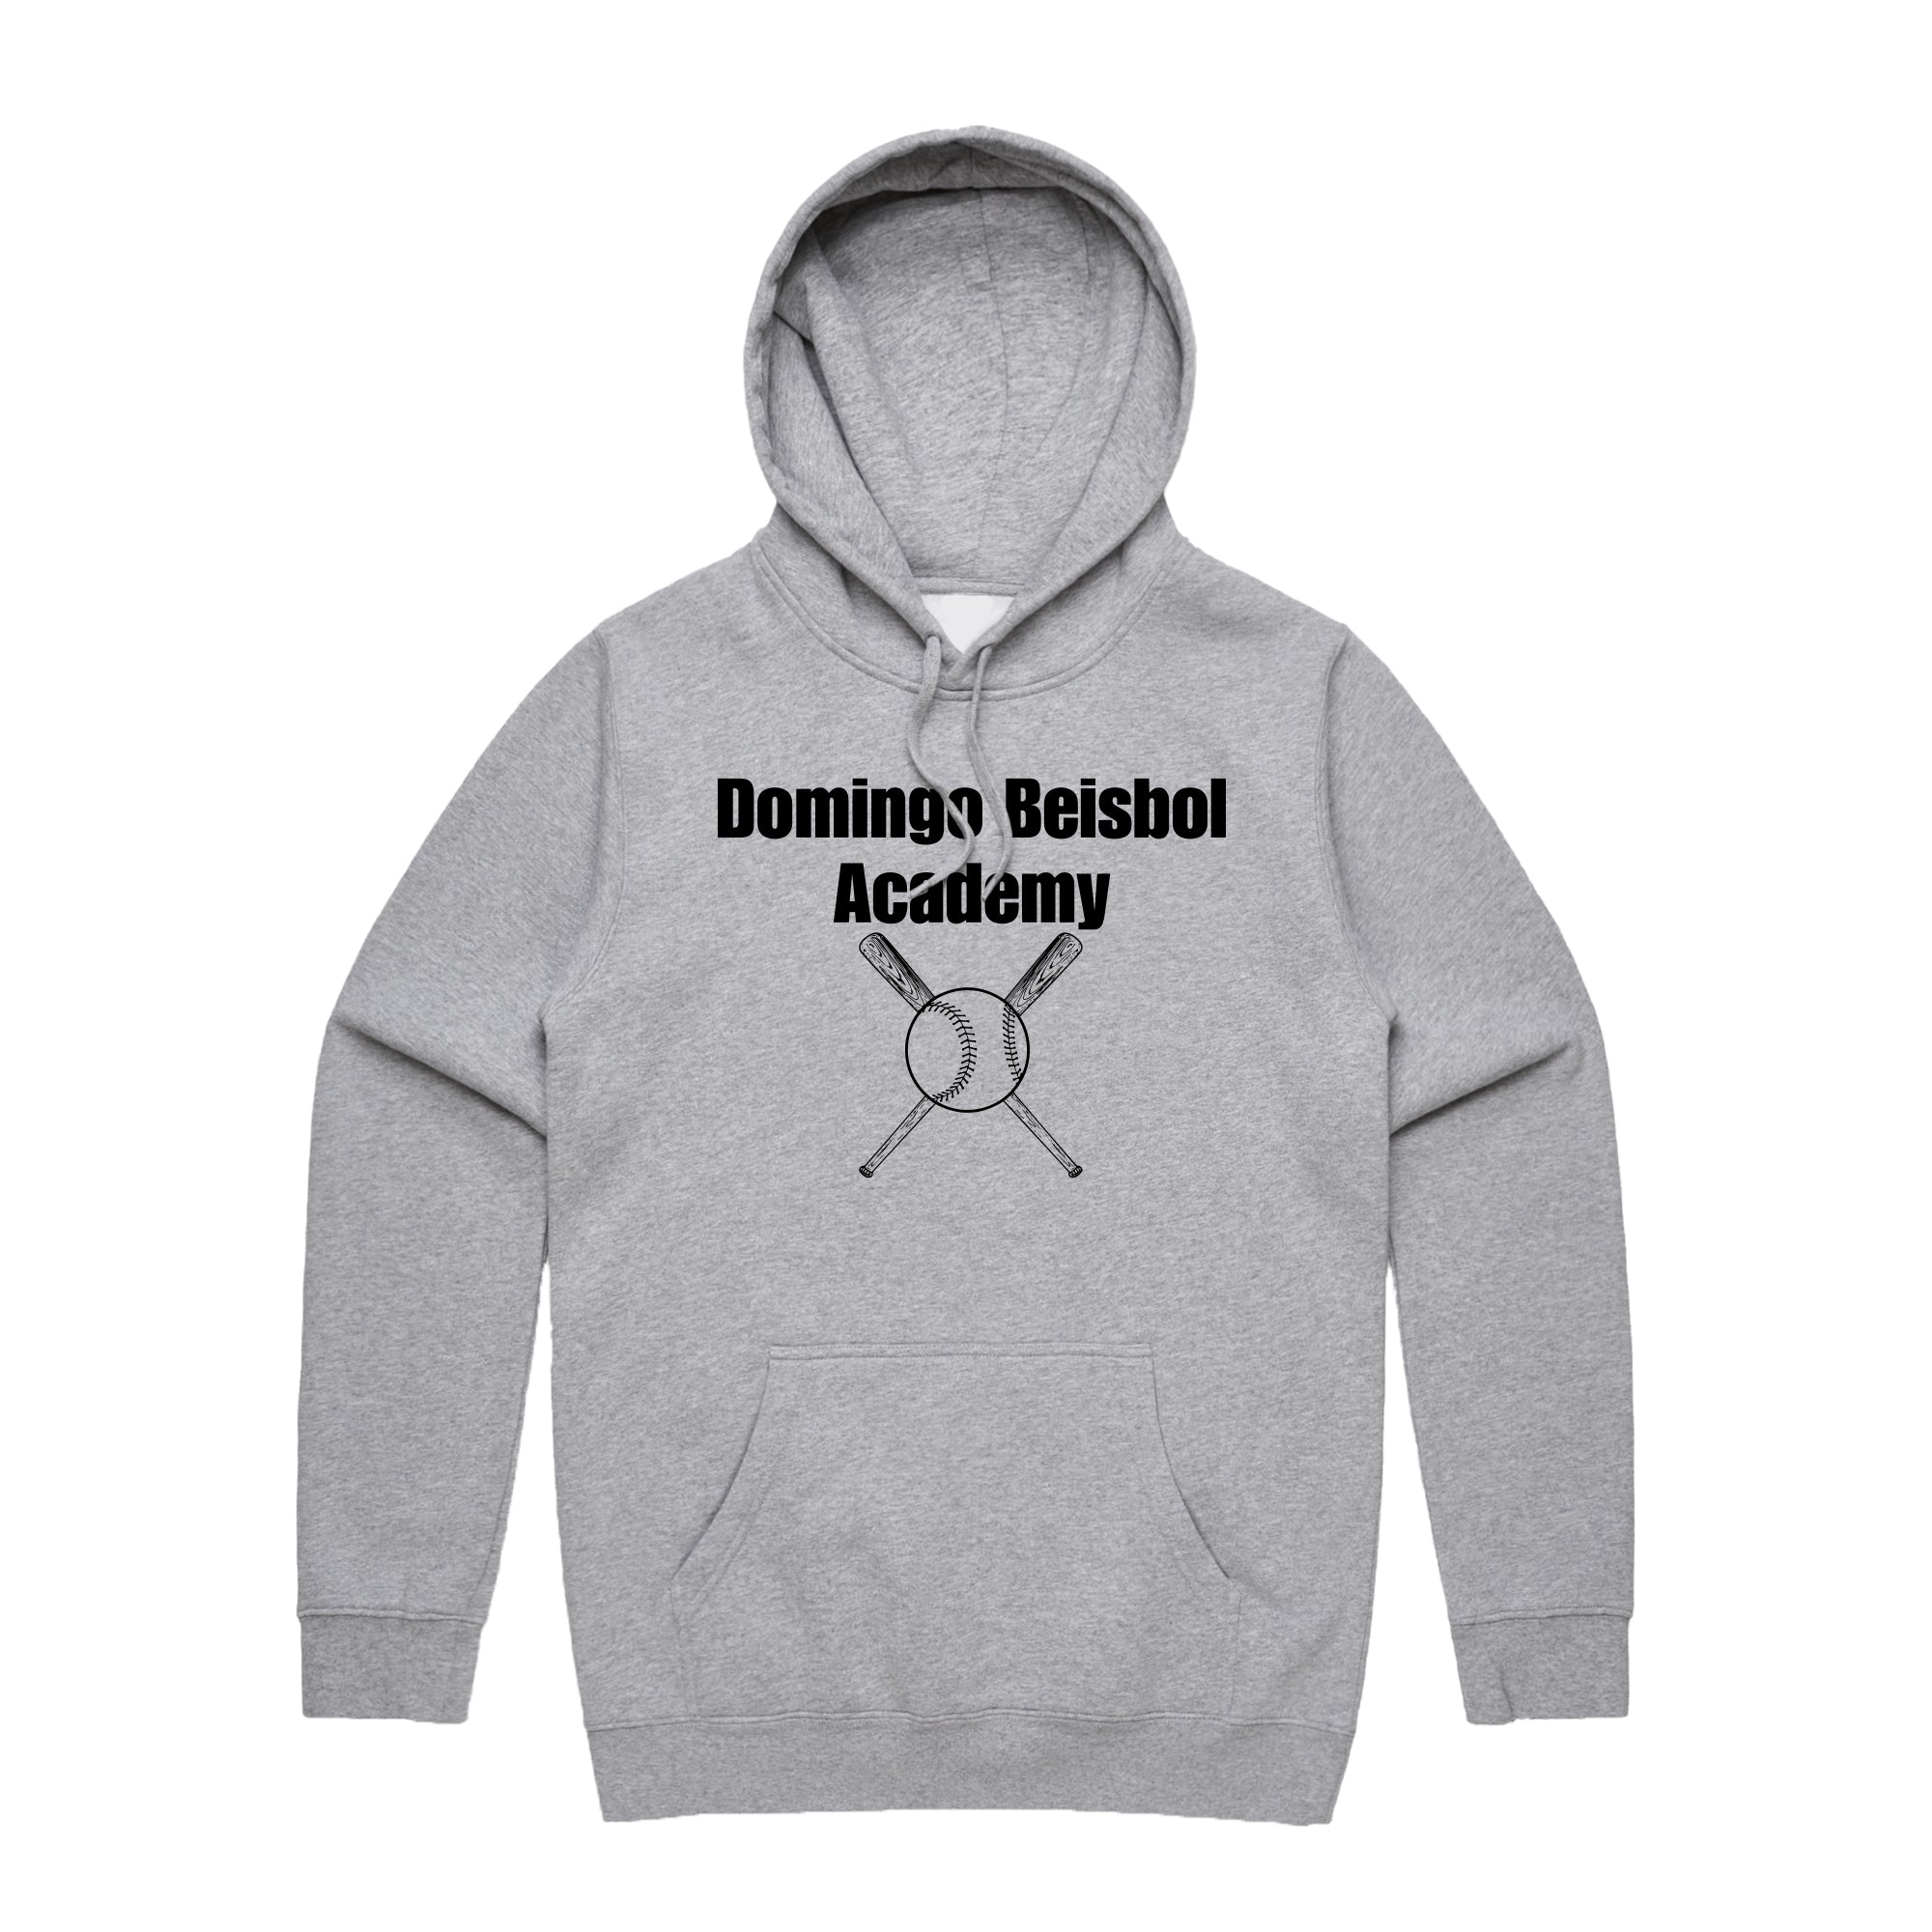 Domingo Beisbol Academy Hoodie